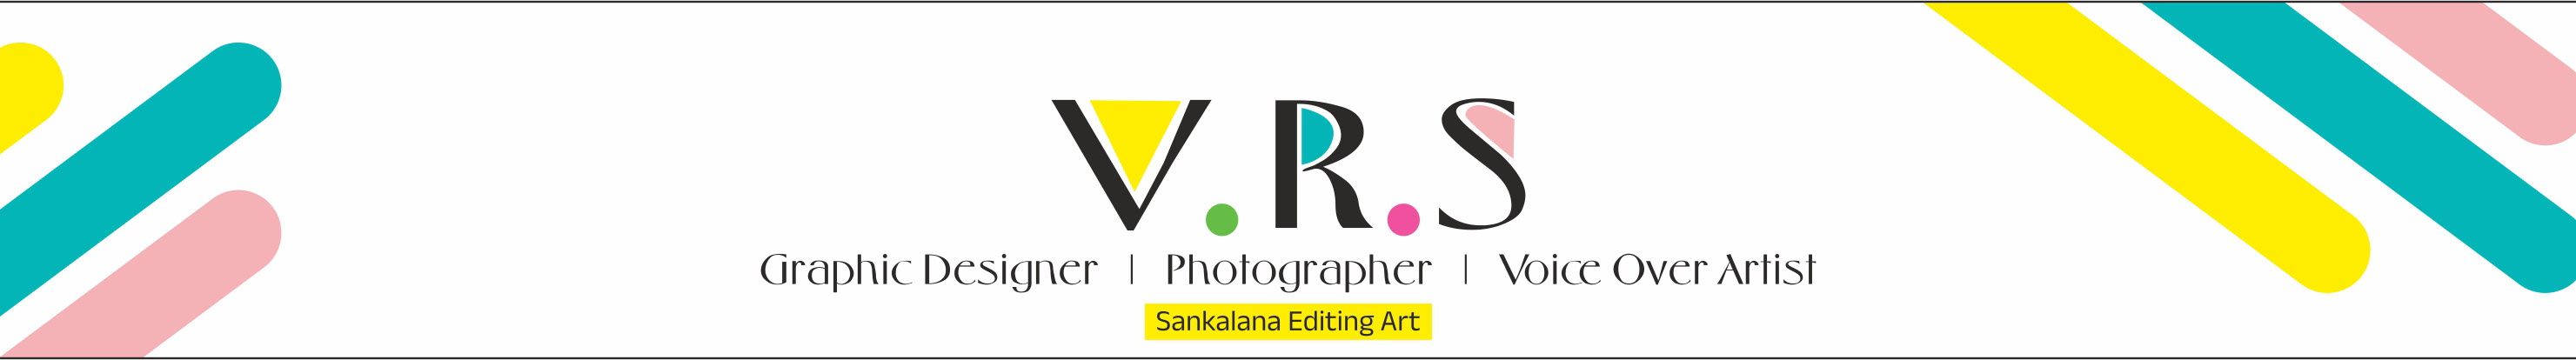 V R S's profile banner